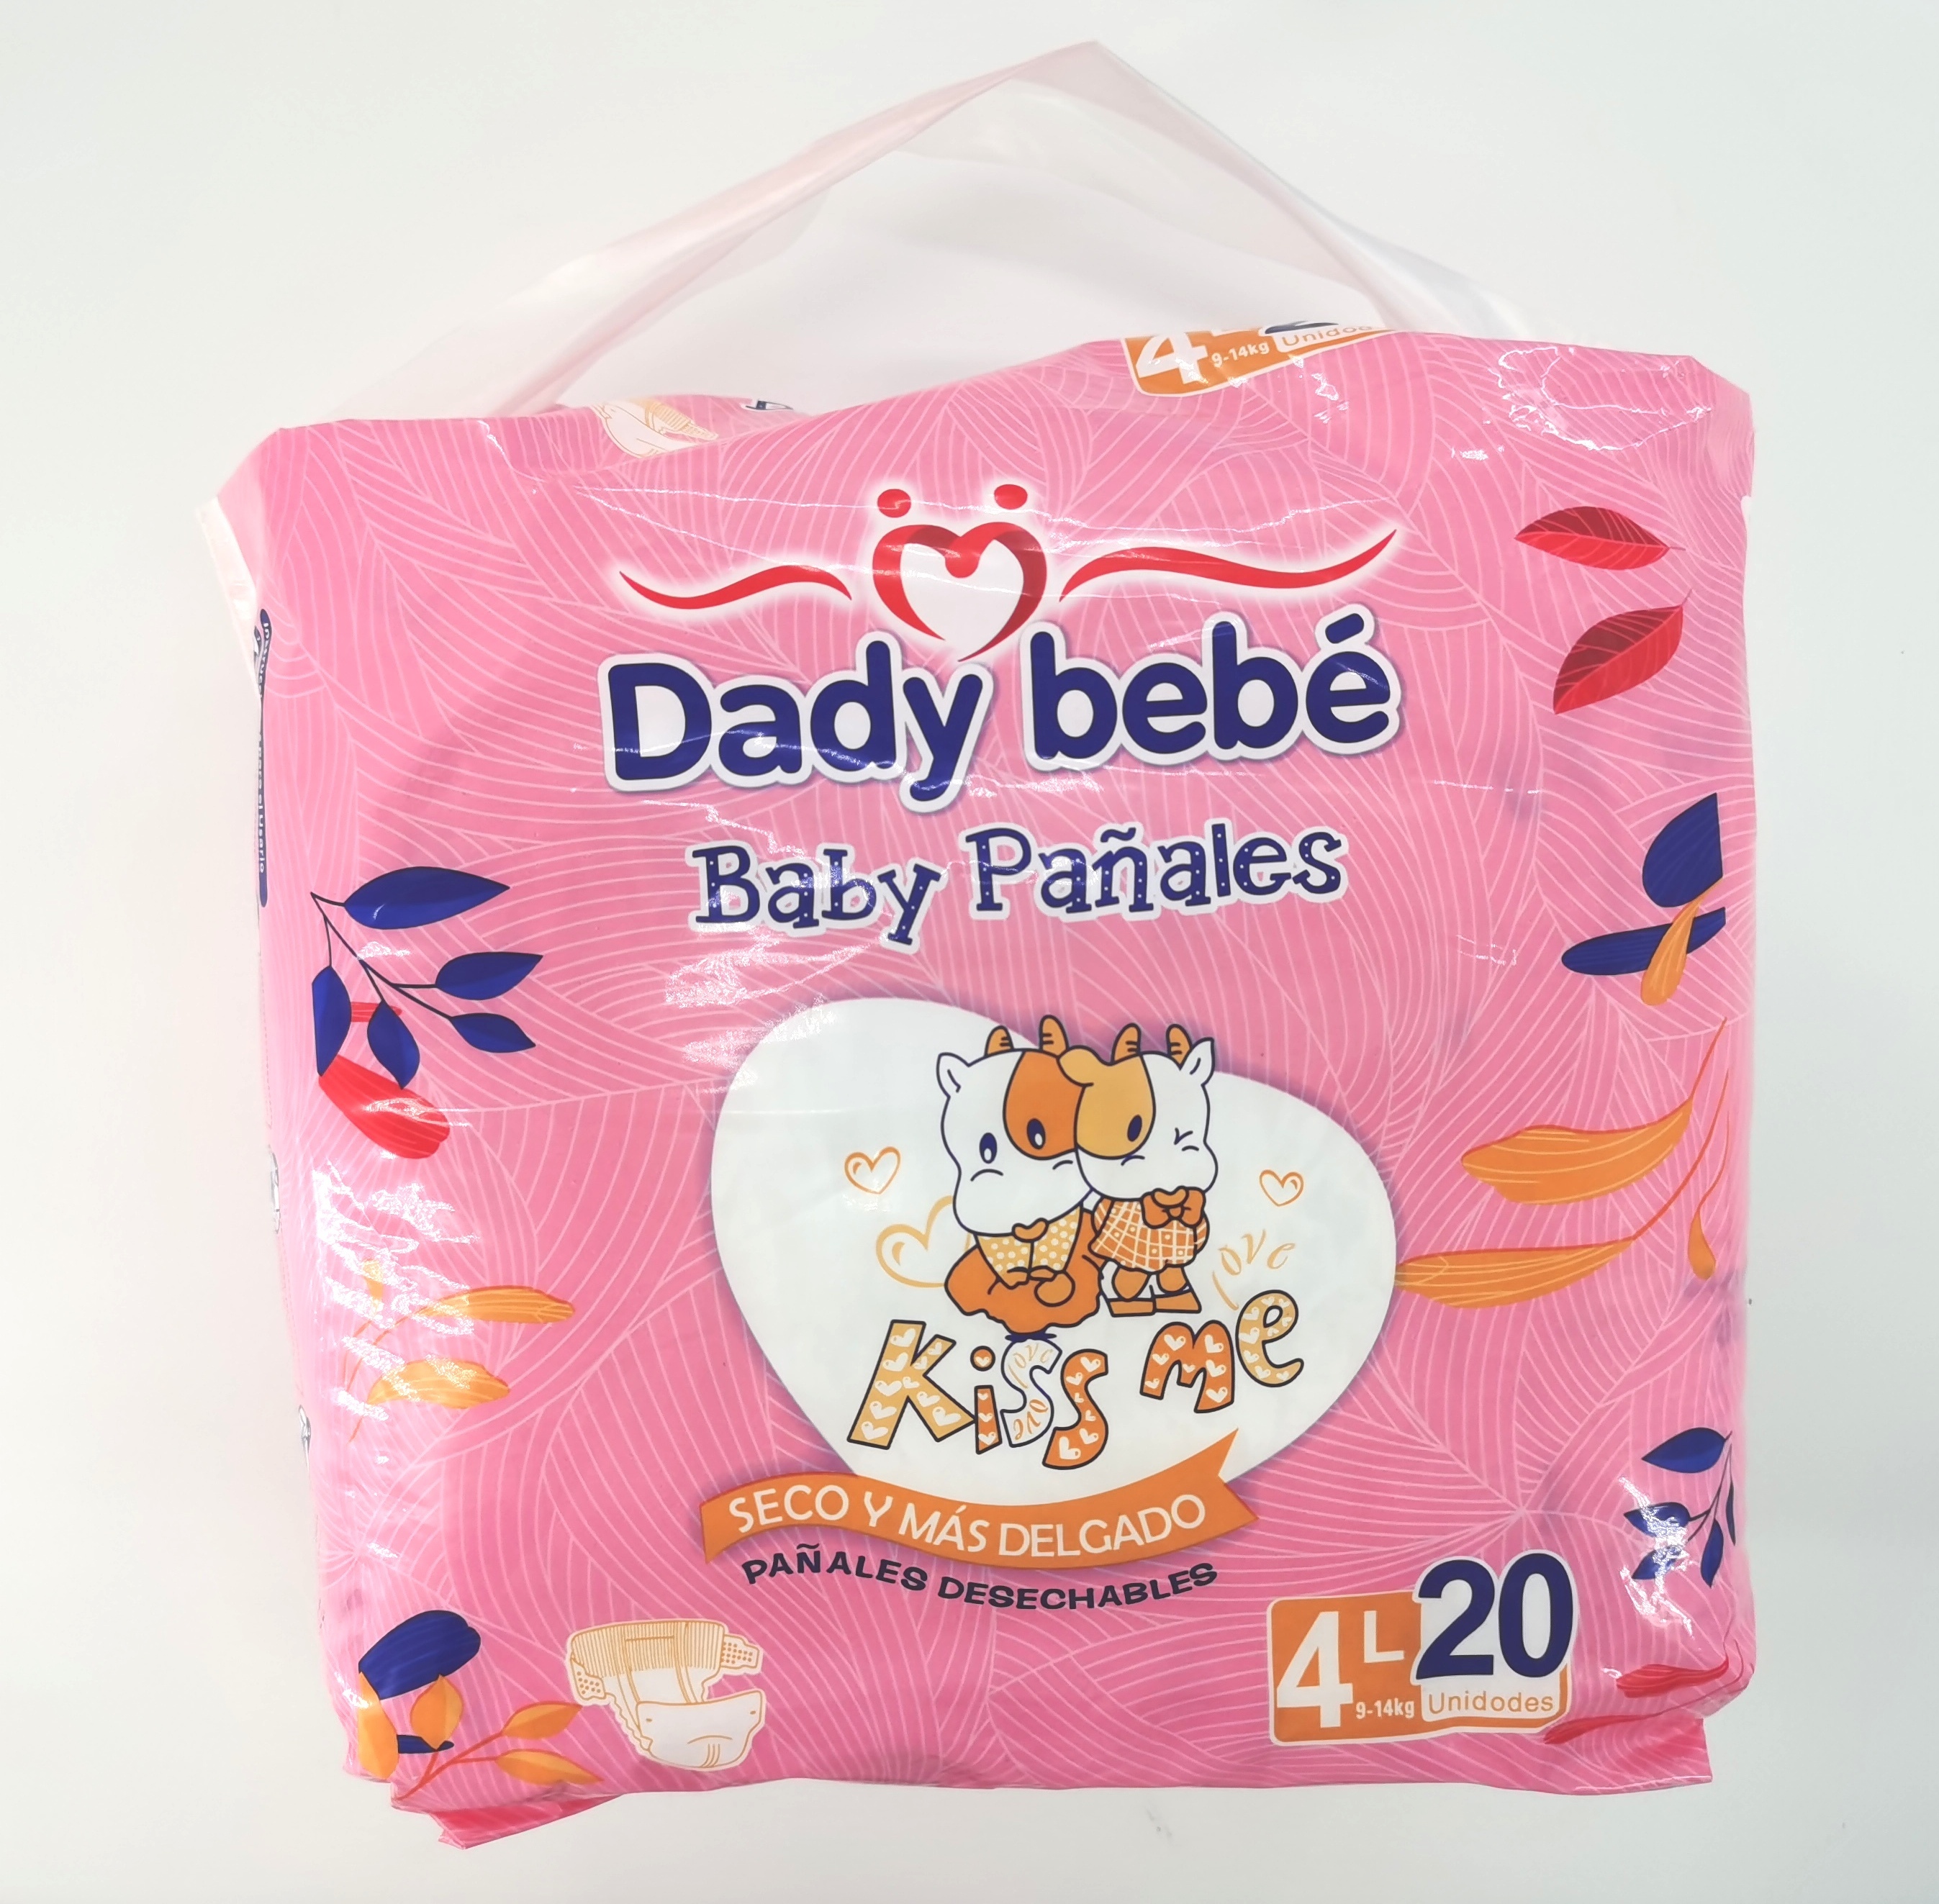 2022 China New Design Bulk Diapers - Baby diapers Japan santi Baby nappies Manufacturers Nigeria Africa Vietnam Market disposable diaper pad pull up pants panties – Ensha